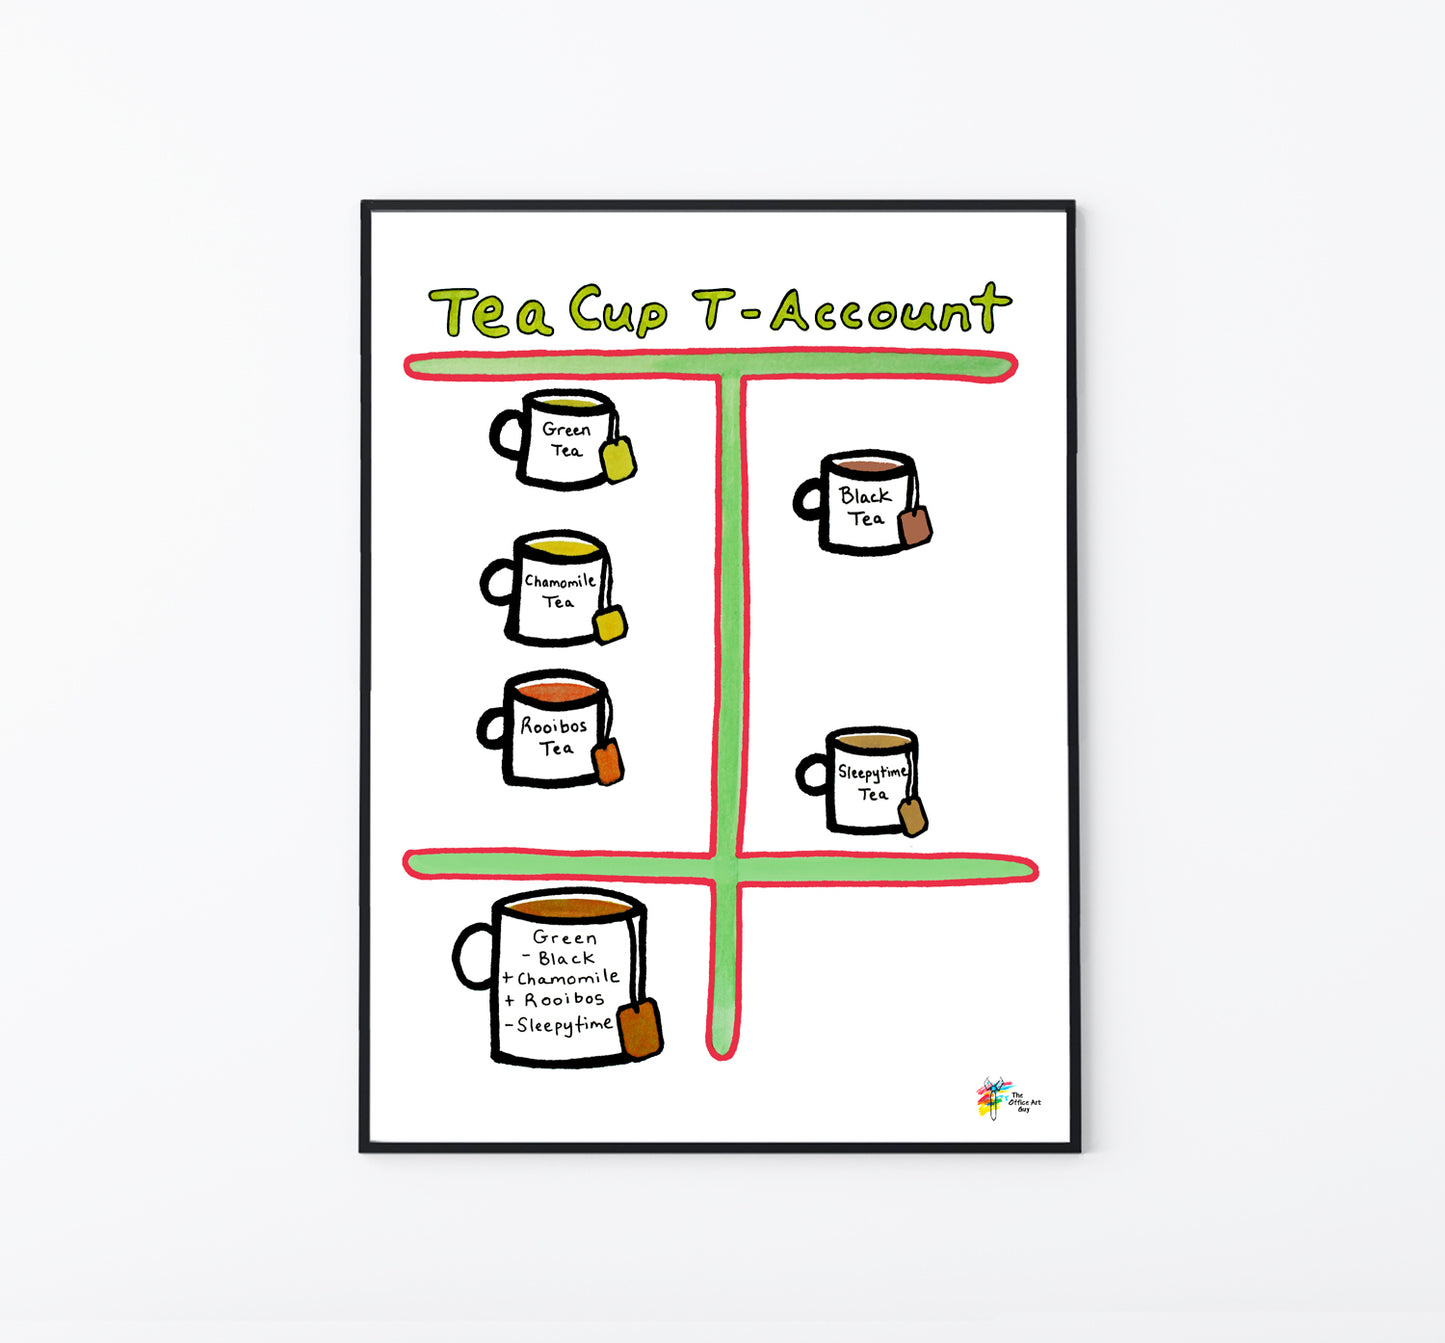 Tea Cup Tea Account Accounting Art Print